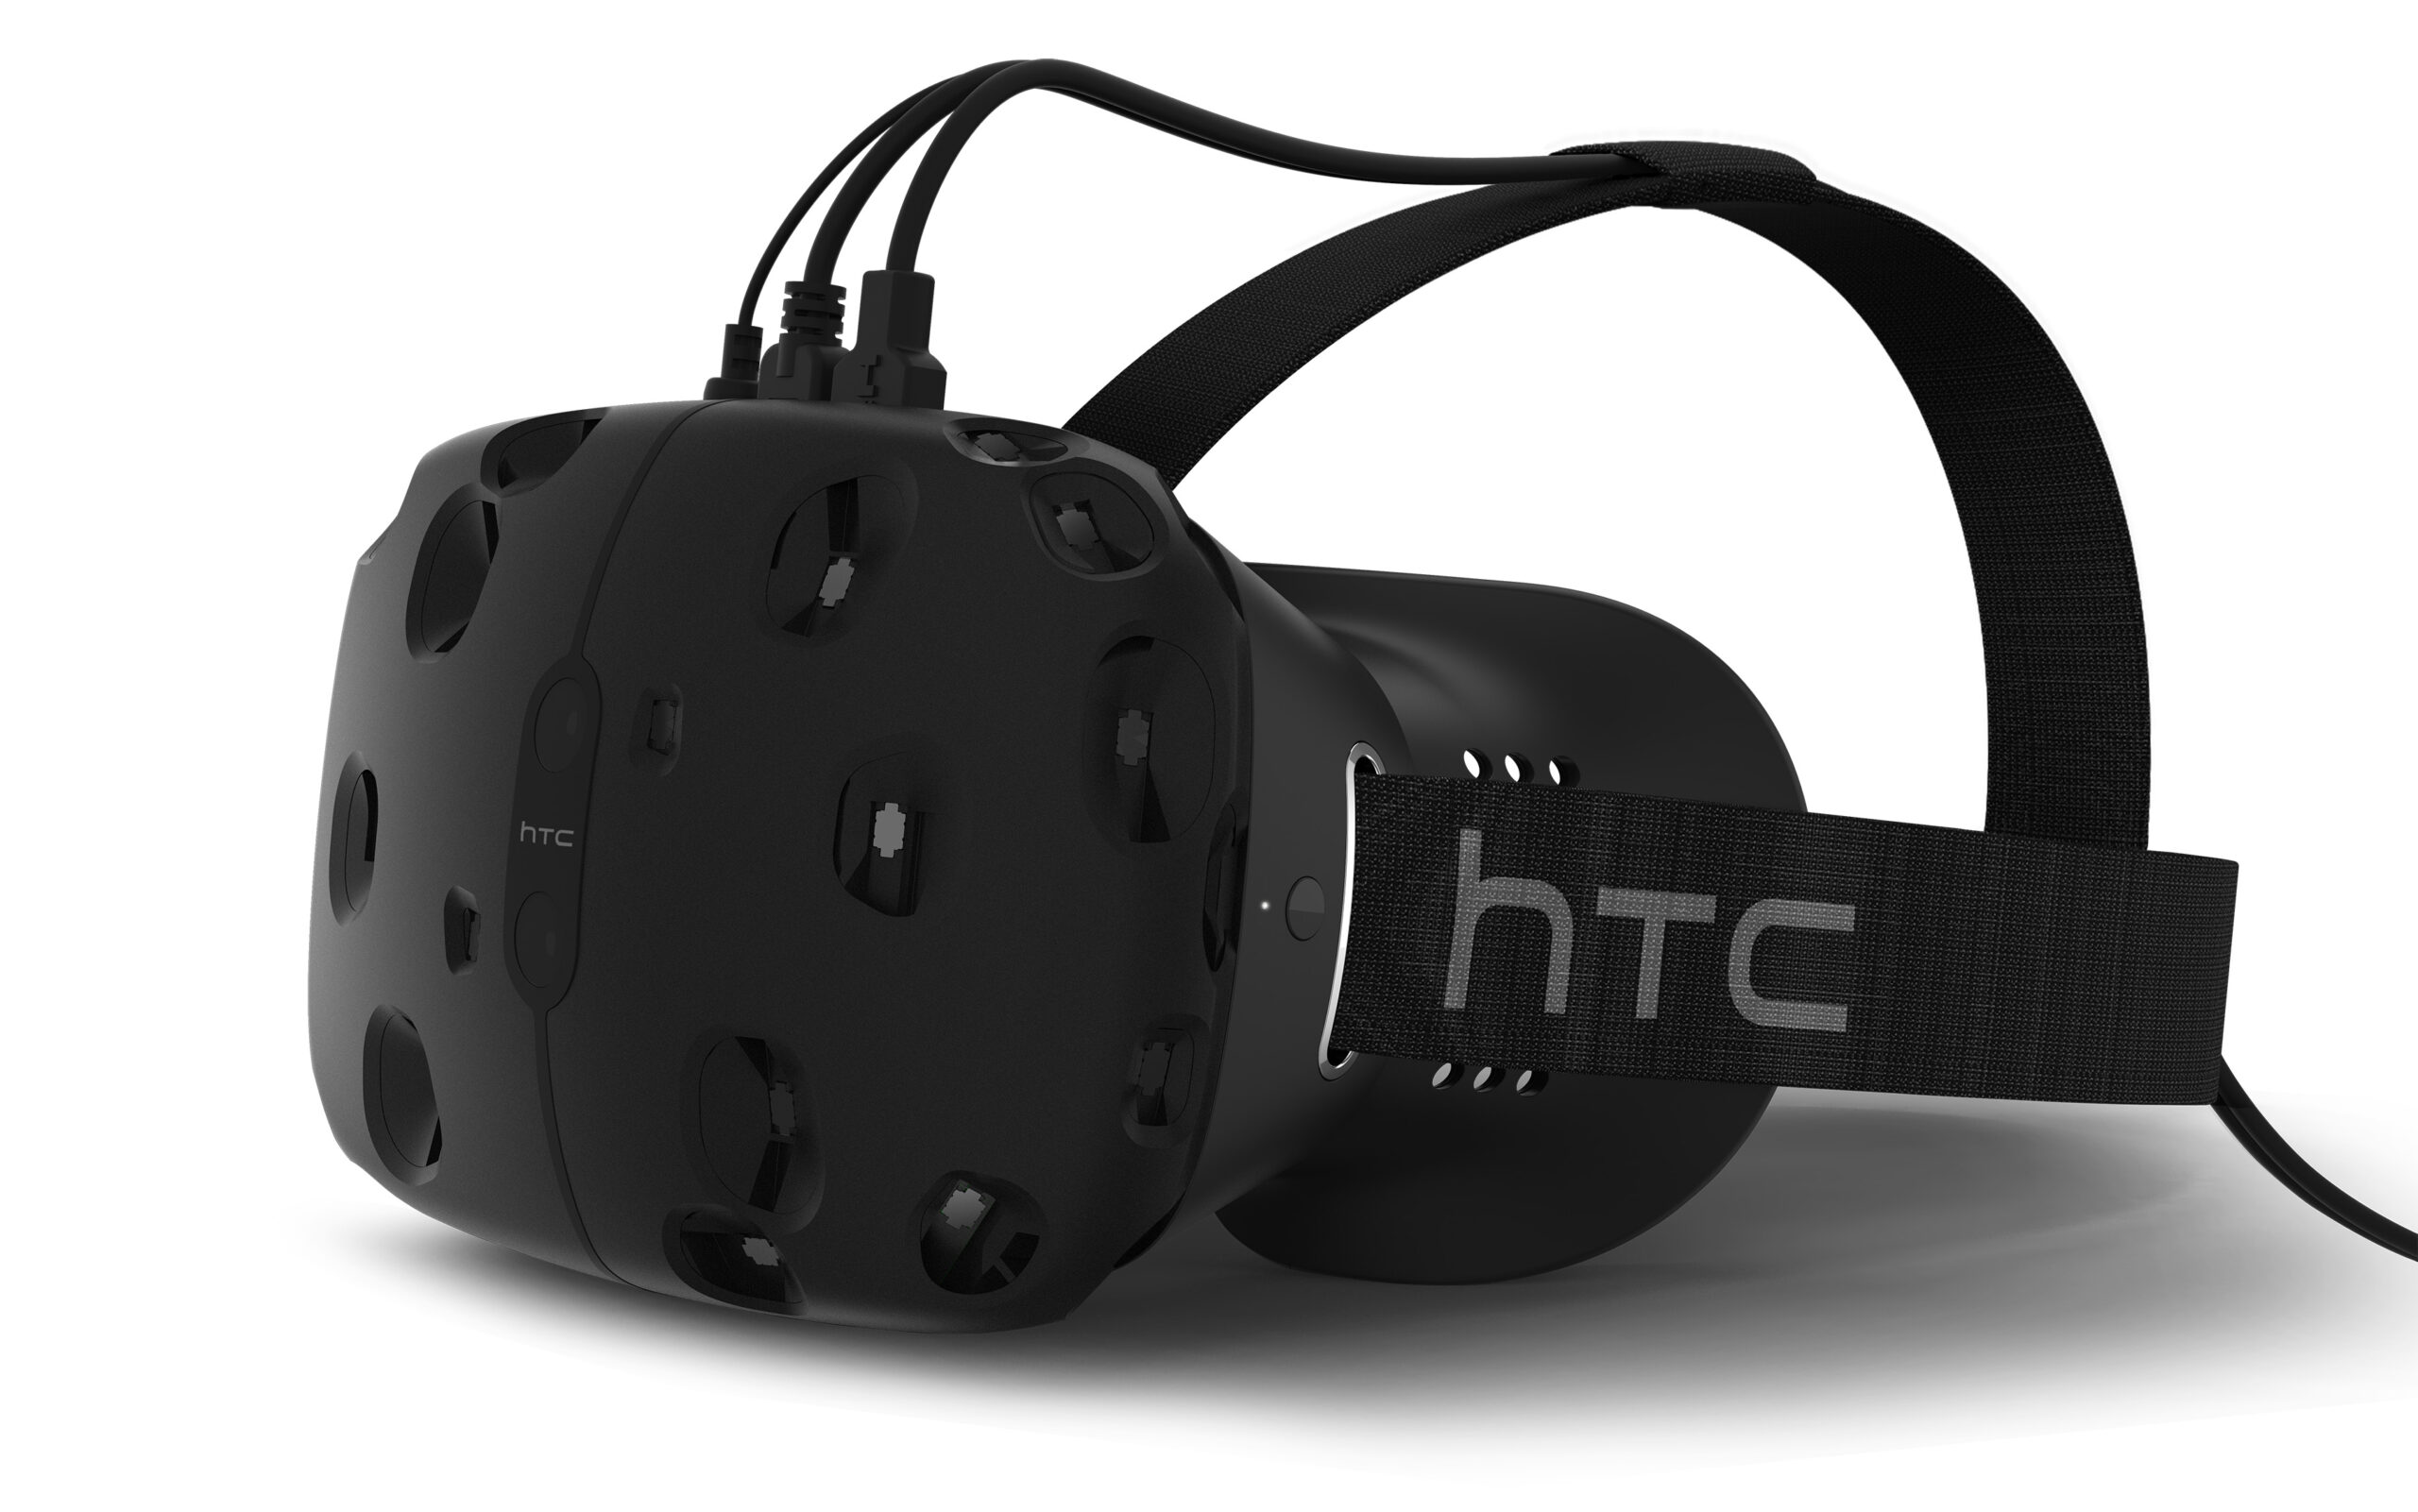 Række ud Decrement hundehvalp With Valve, HTC Unveils New Virtual Reality Headset 'HTC Vive'